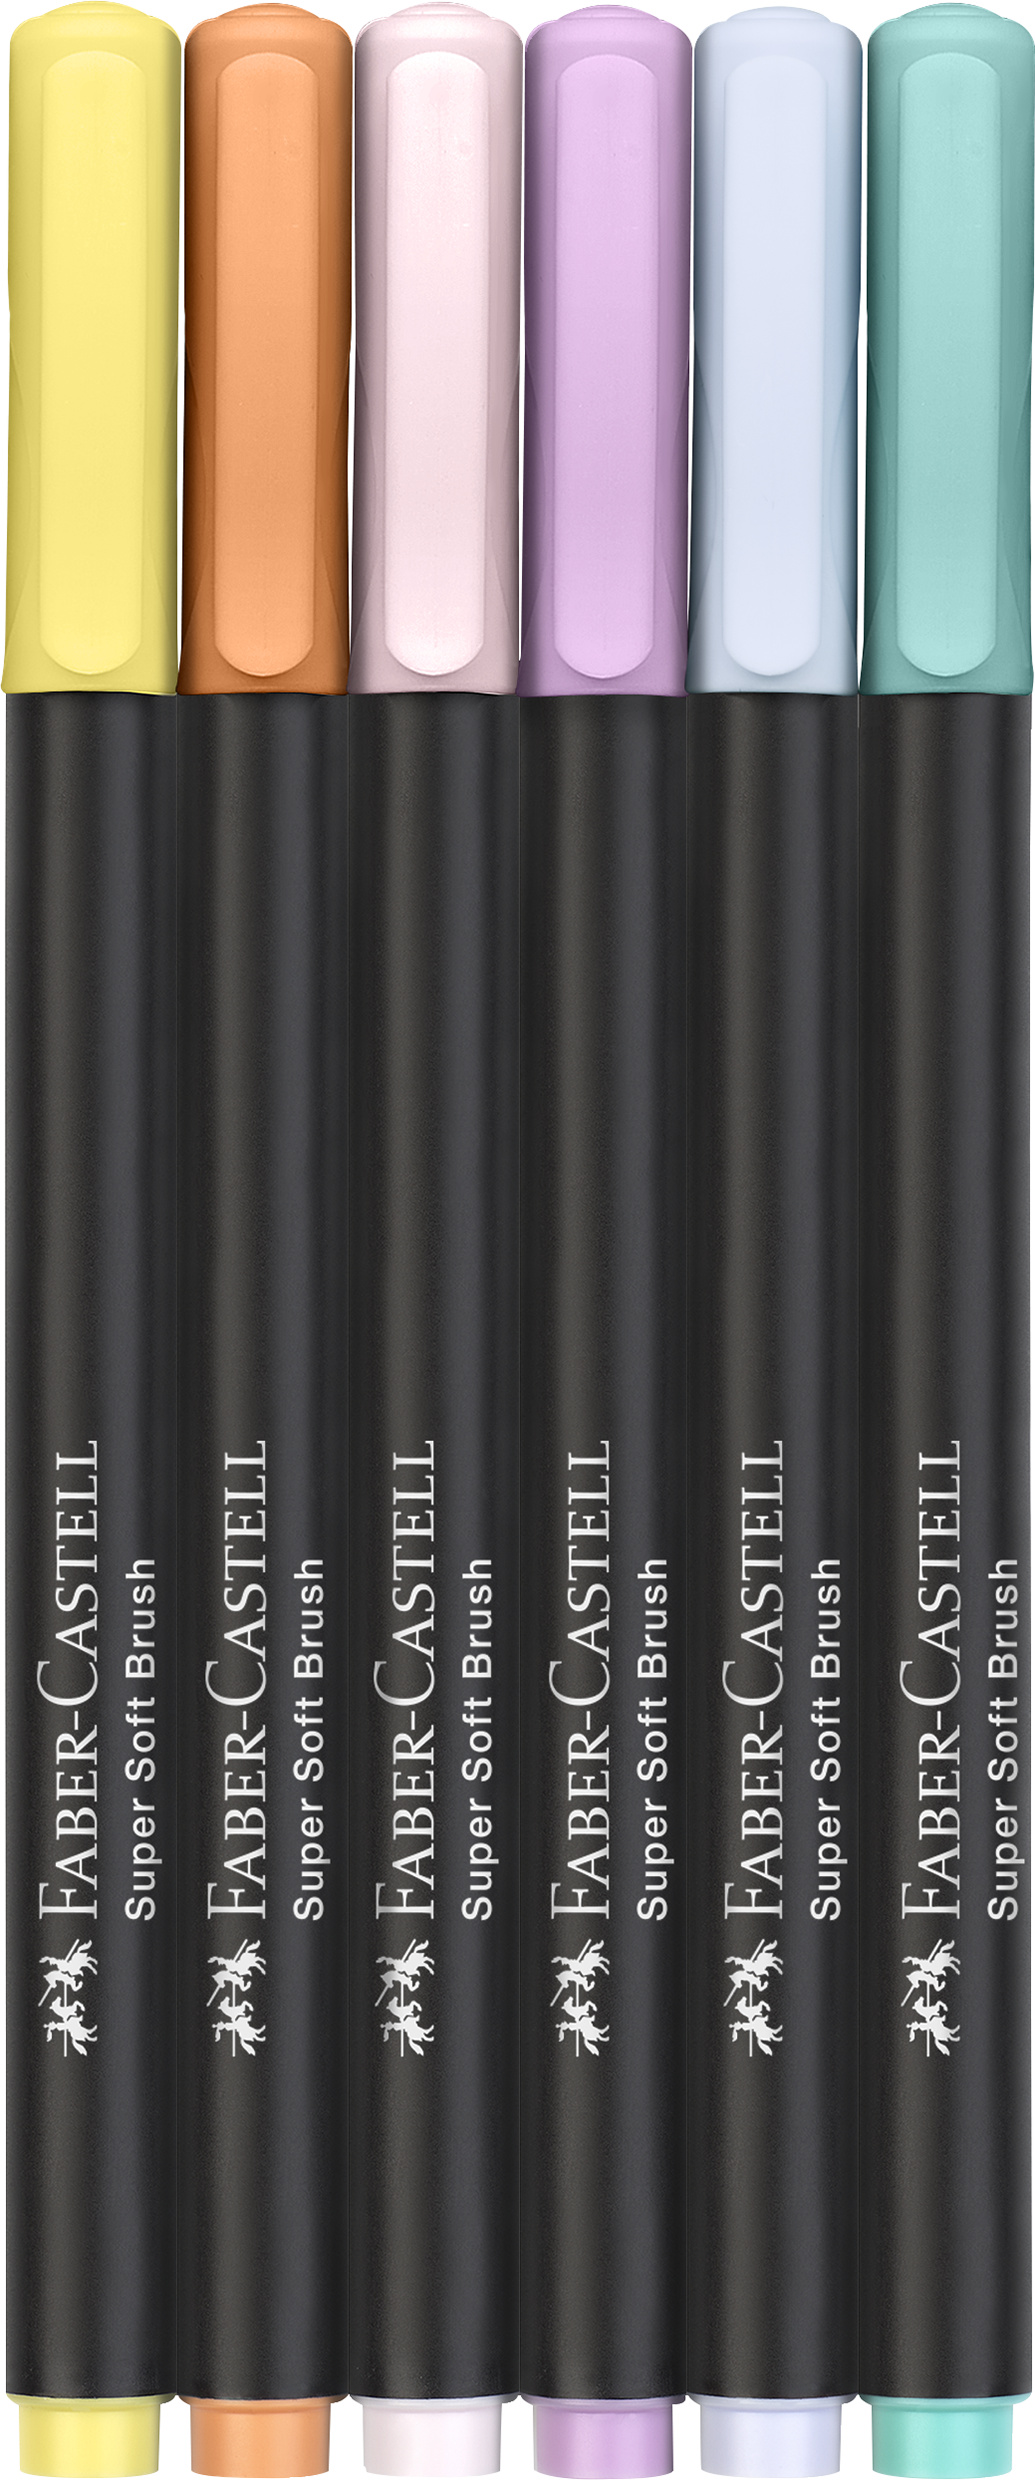 Faber-Castell_Brush pen Black Edition pastel, cardboard box of 6_EUR 5,50 (2)